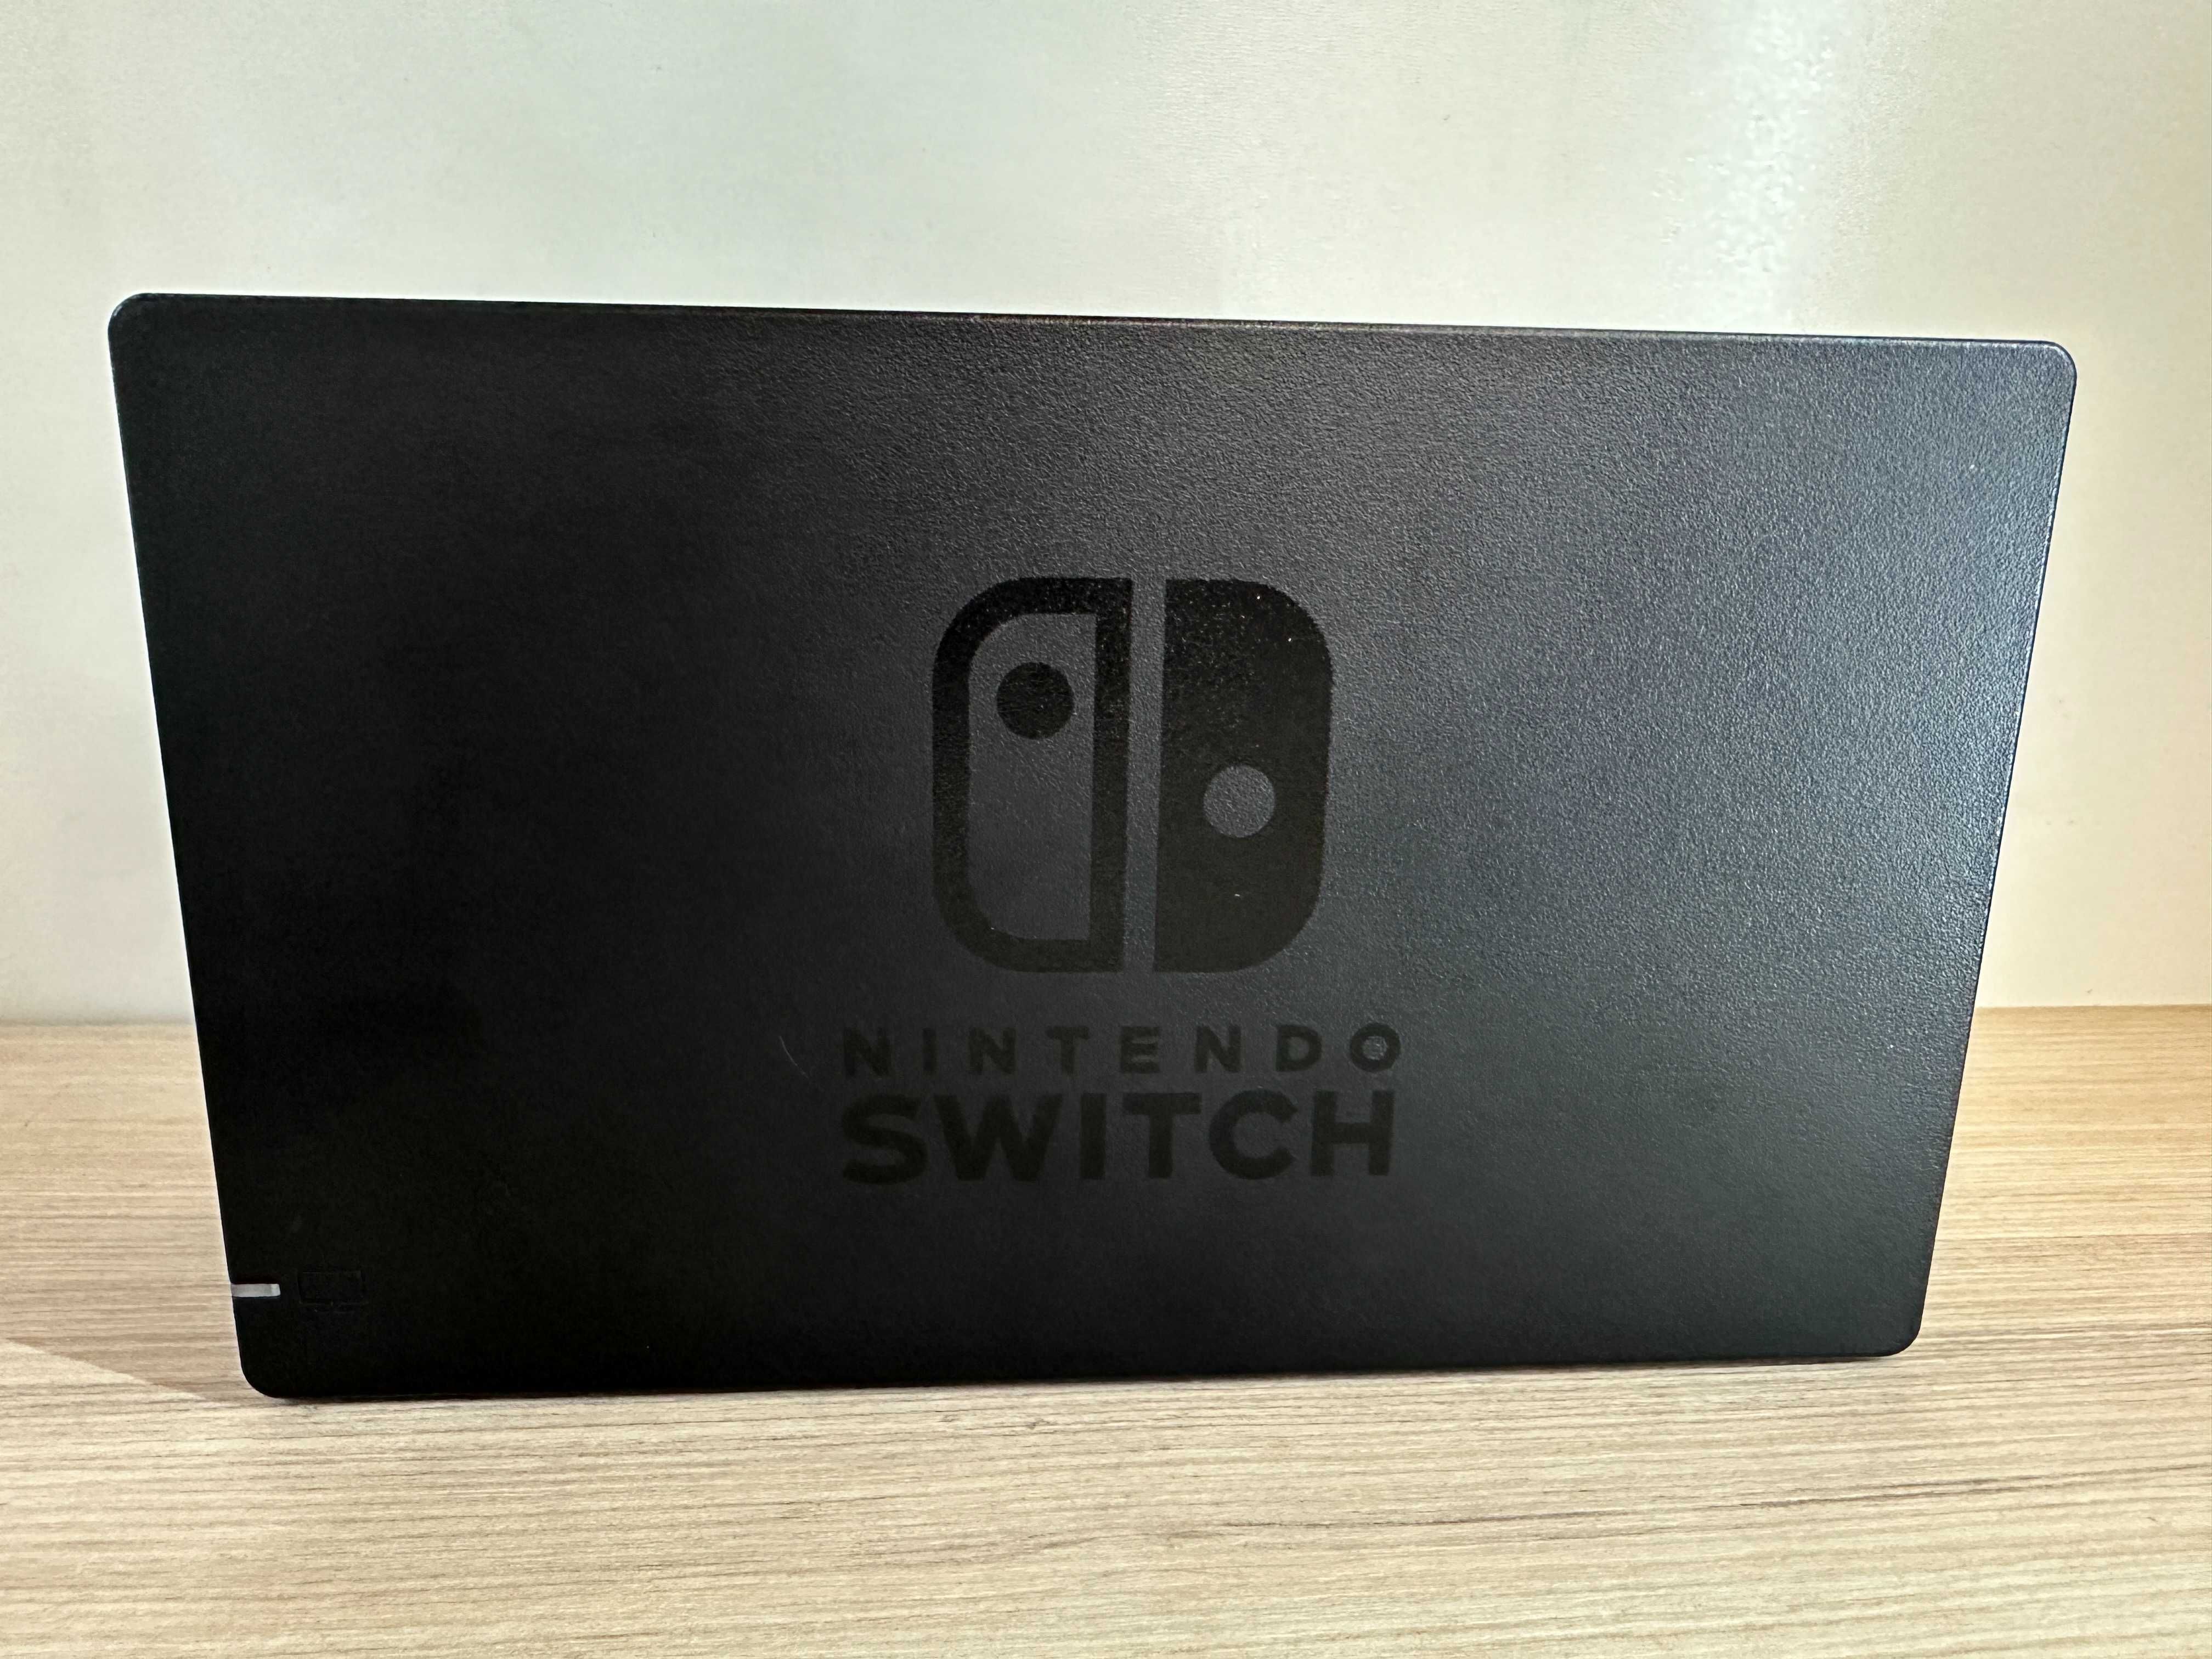 Konsola Nintendo Switch Neon Red & Blue Joy-Con 32 GB